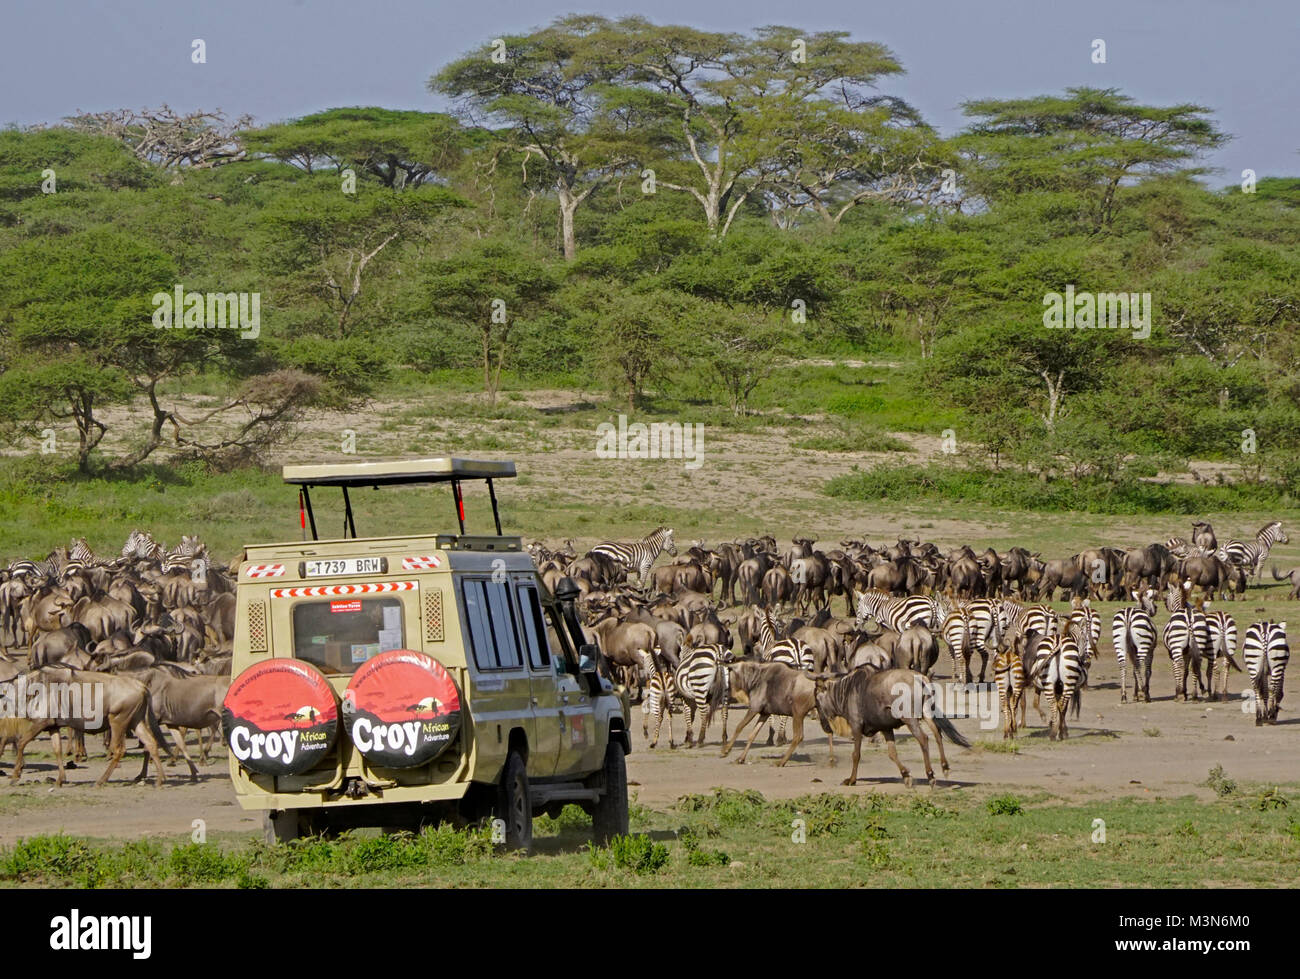 Safari van approaching herds of wildebeest and zebras grazing in preparation of start of great migration on Serengeti. Stock Photo